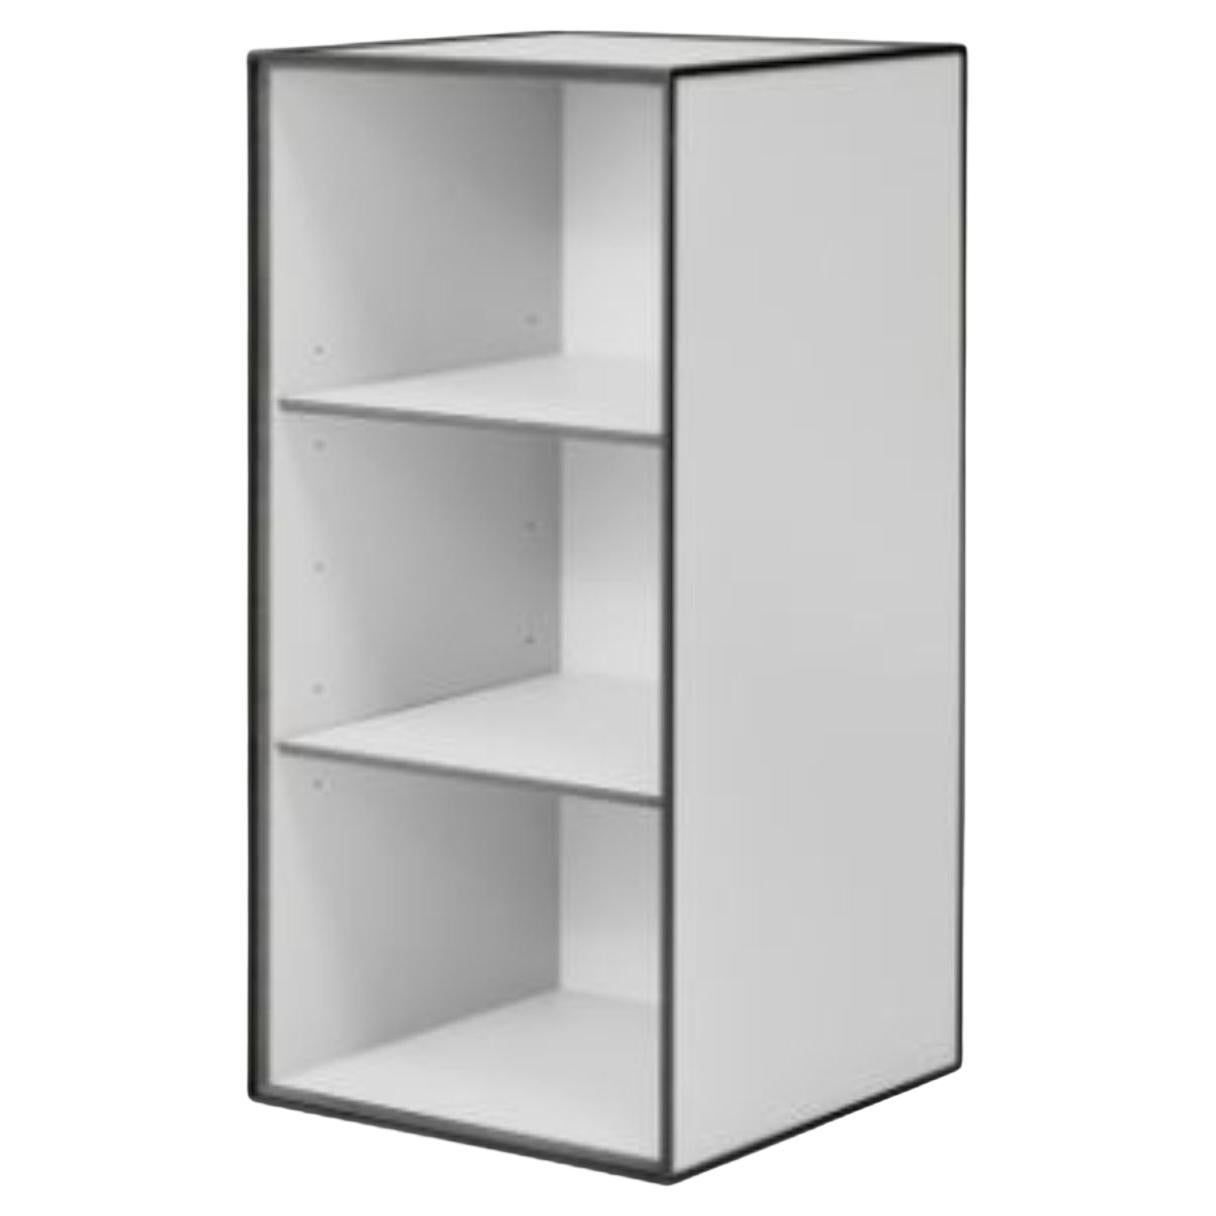 70 Light Grey Frame Box with 2 Shelves by Lassen